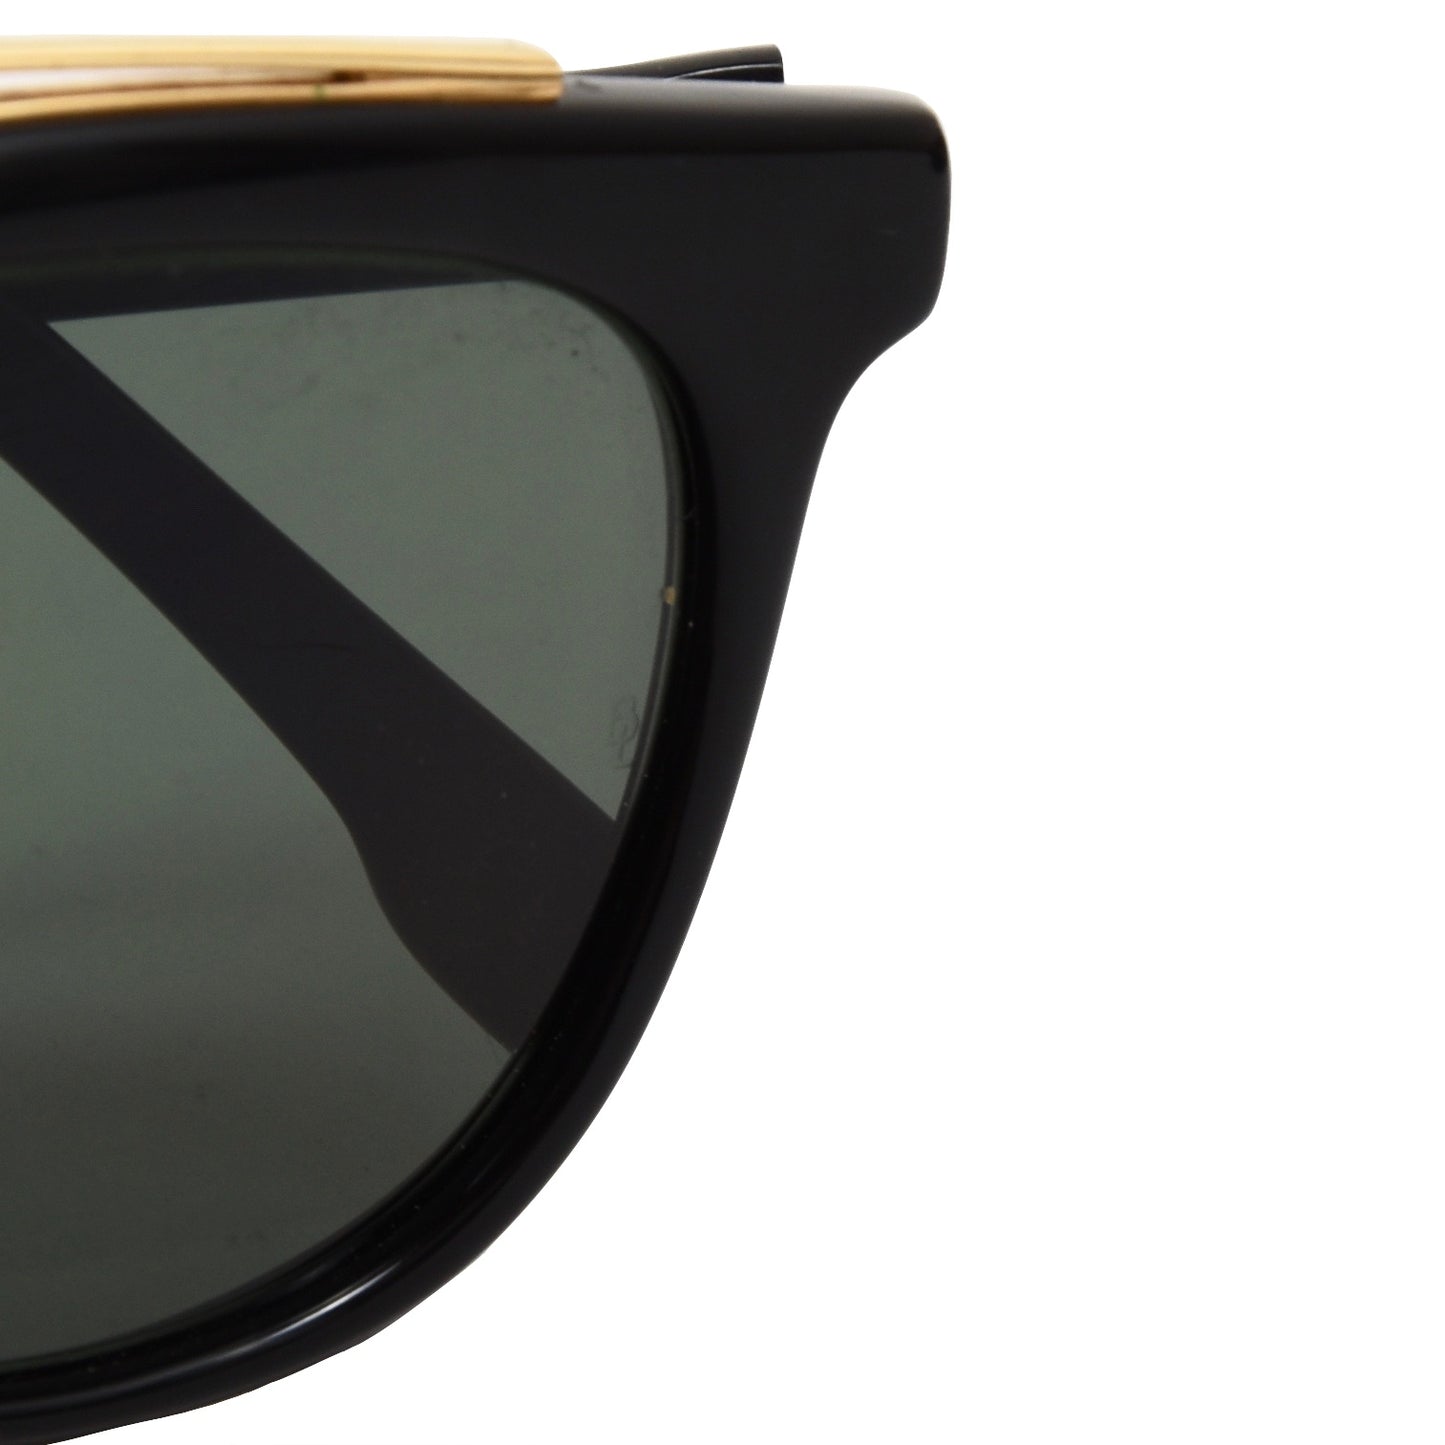 Bausch & Lomb Ray-Ban Gatsby Style 5 Sunglasses - Black